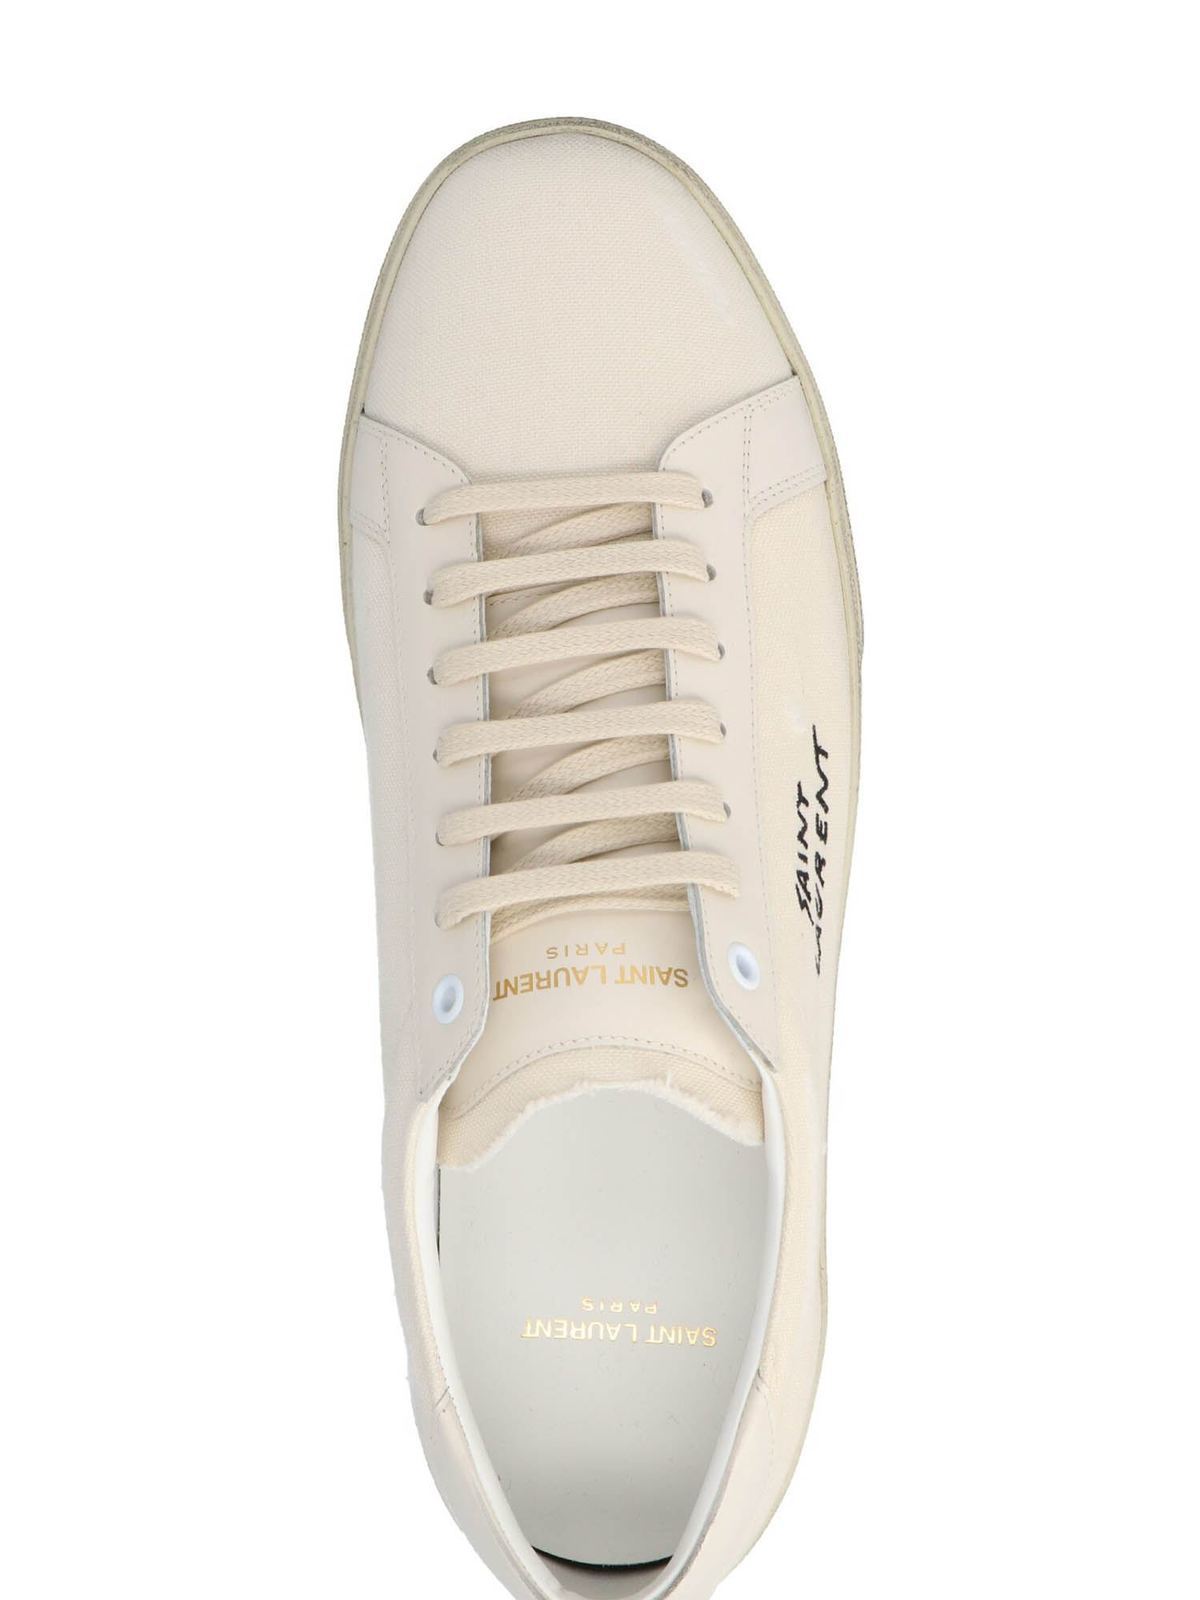 Saint Laurent - Court Classic SL/06 sneakers in cream color - trainers ...